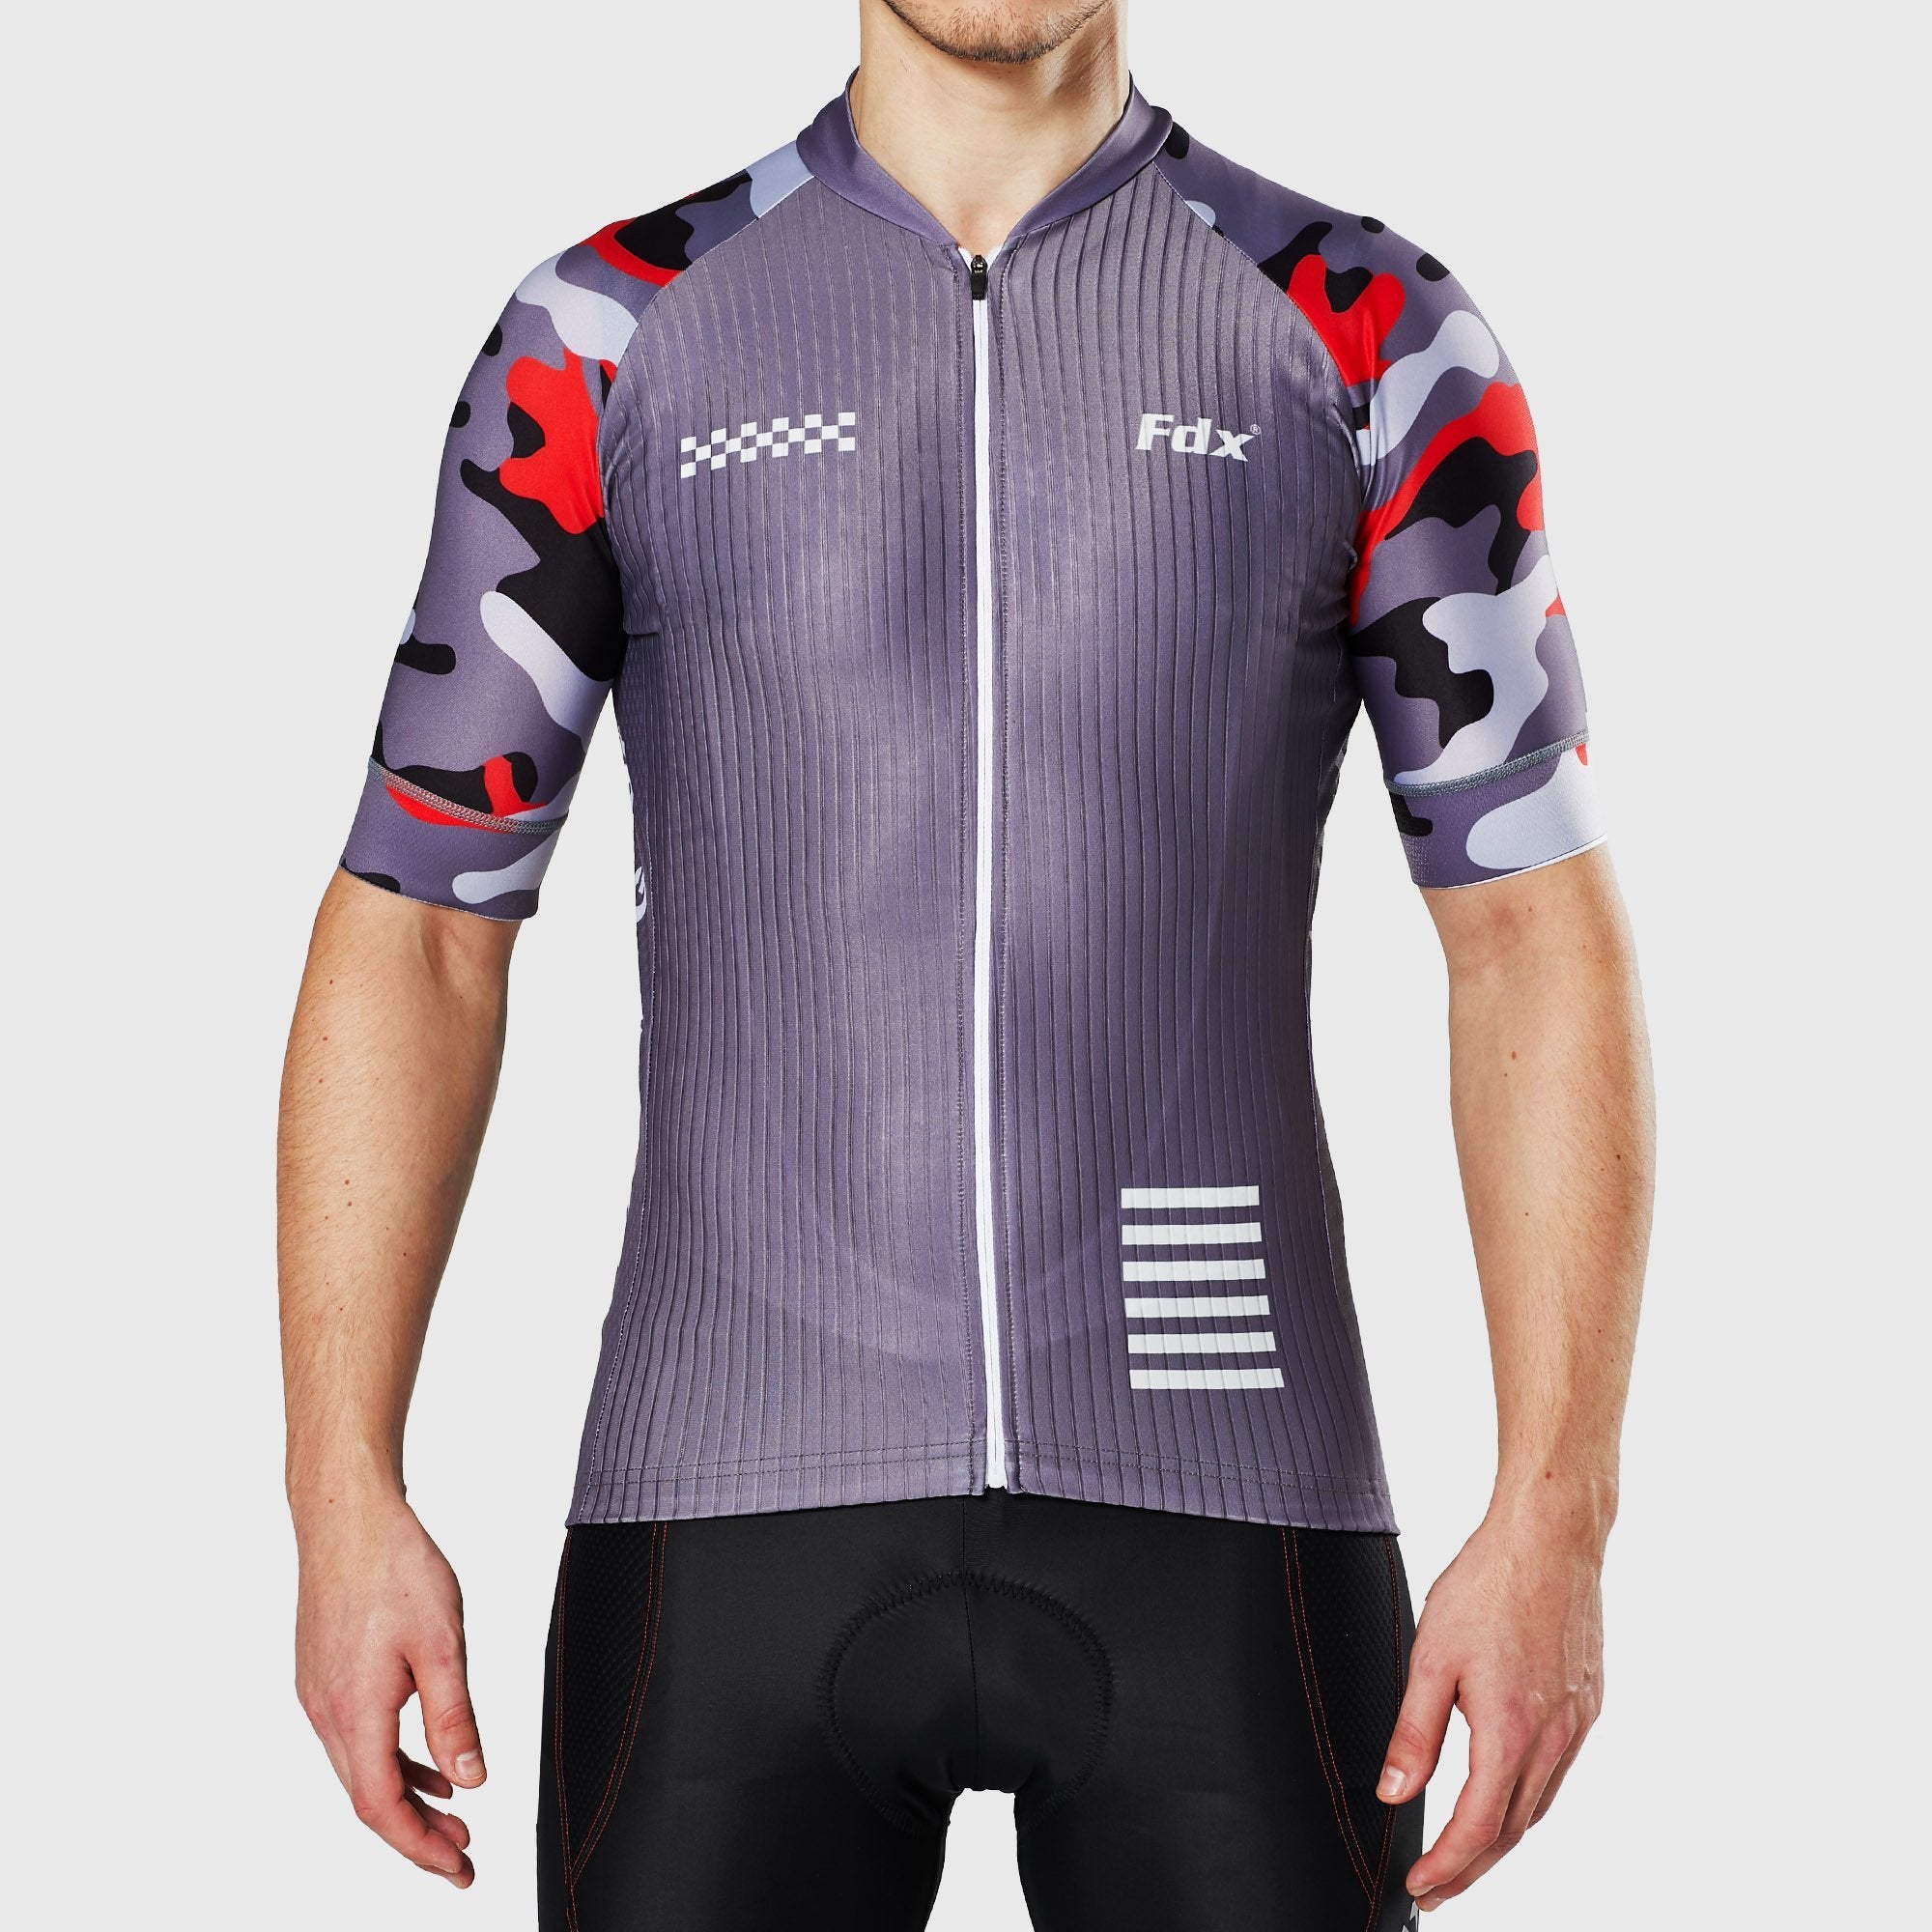 Fdx Men's Grey Camo Short Sleeve Cycling Jersey Best Summer Road Bike Wear Light Weight, Hi-viz Reflectors & Pockets - Camouflage